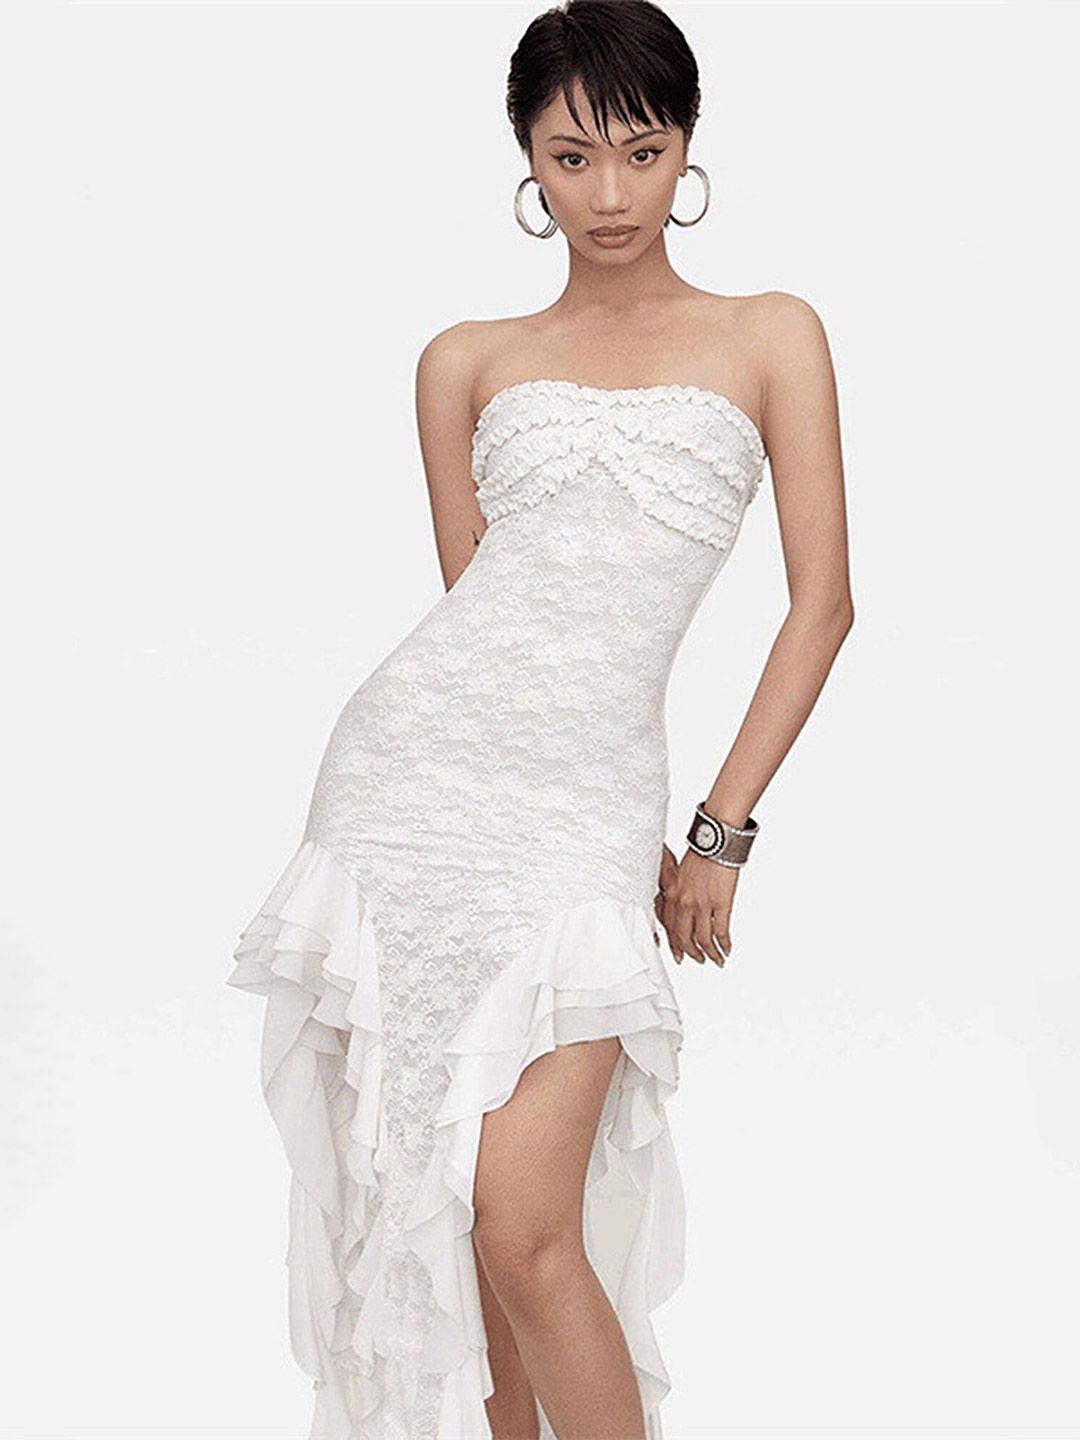 lulu & sky white dress